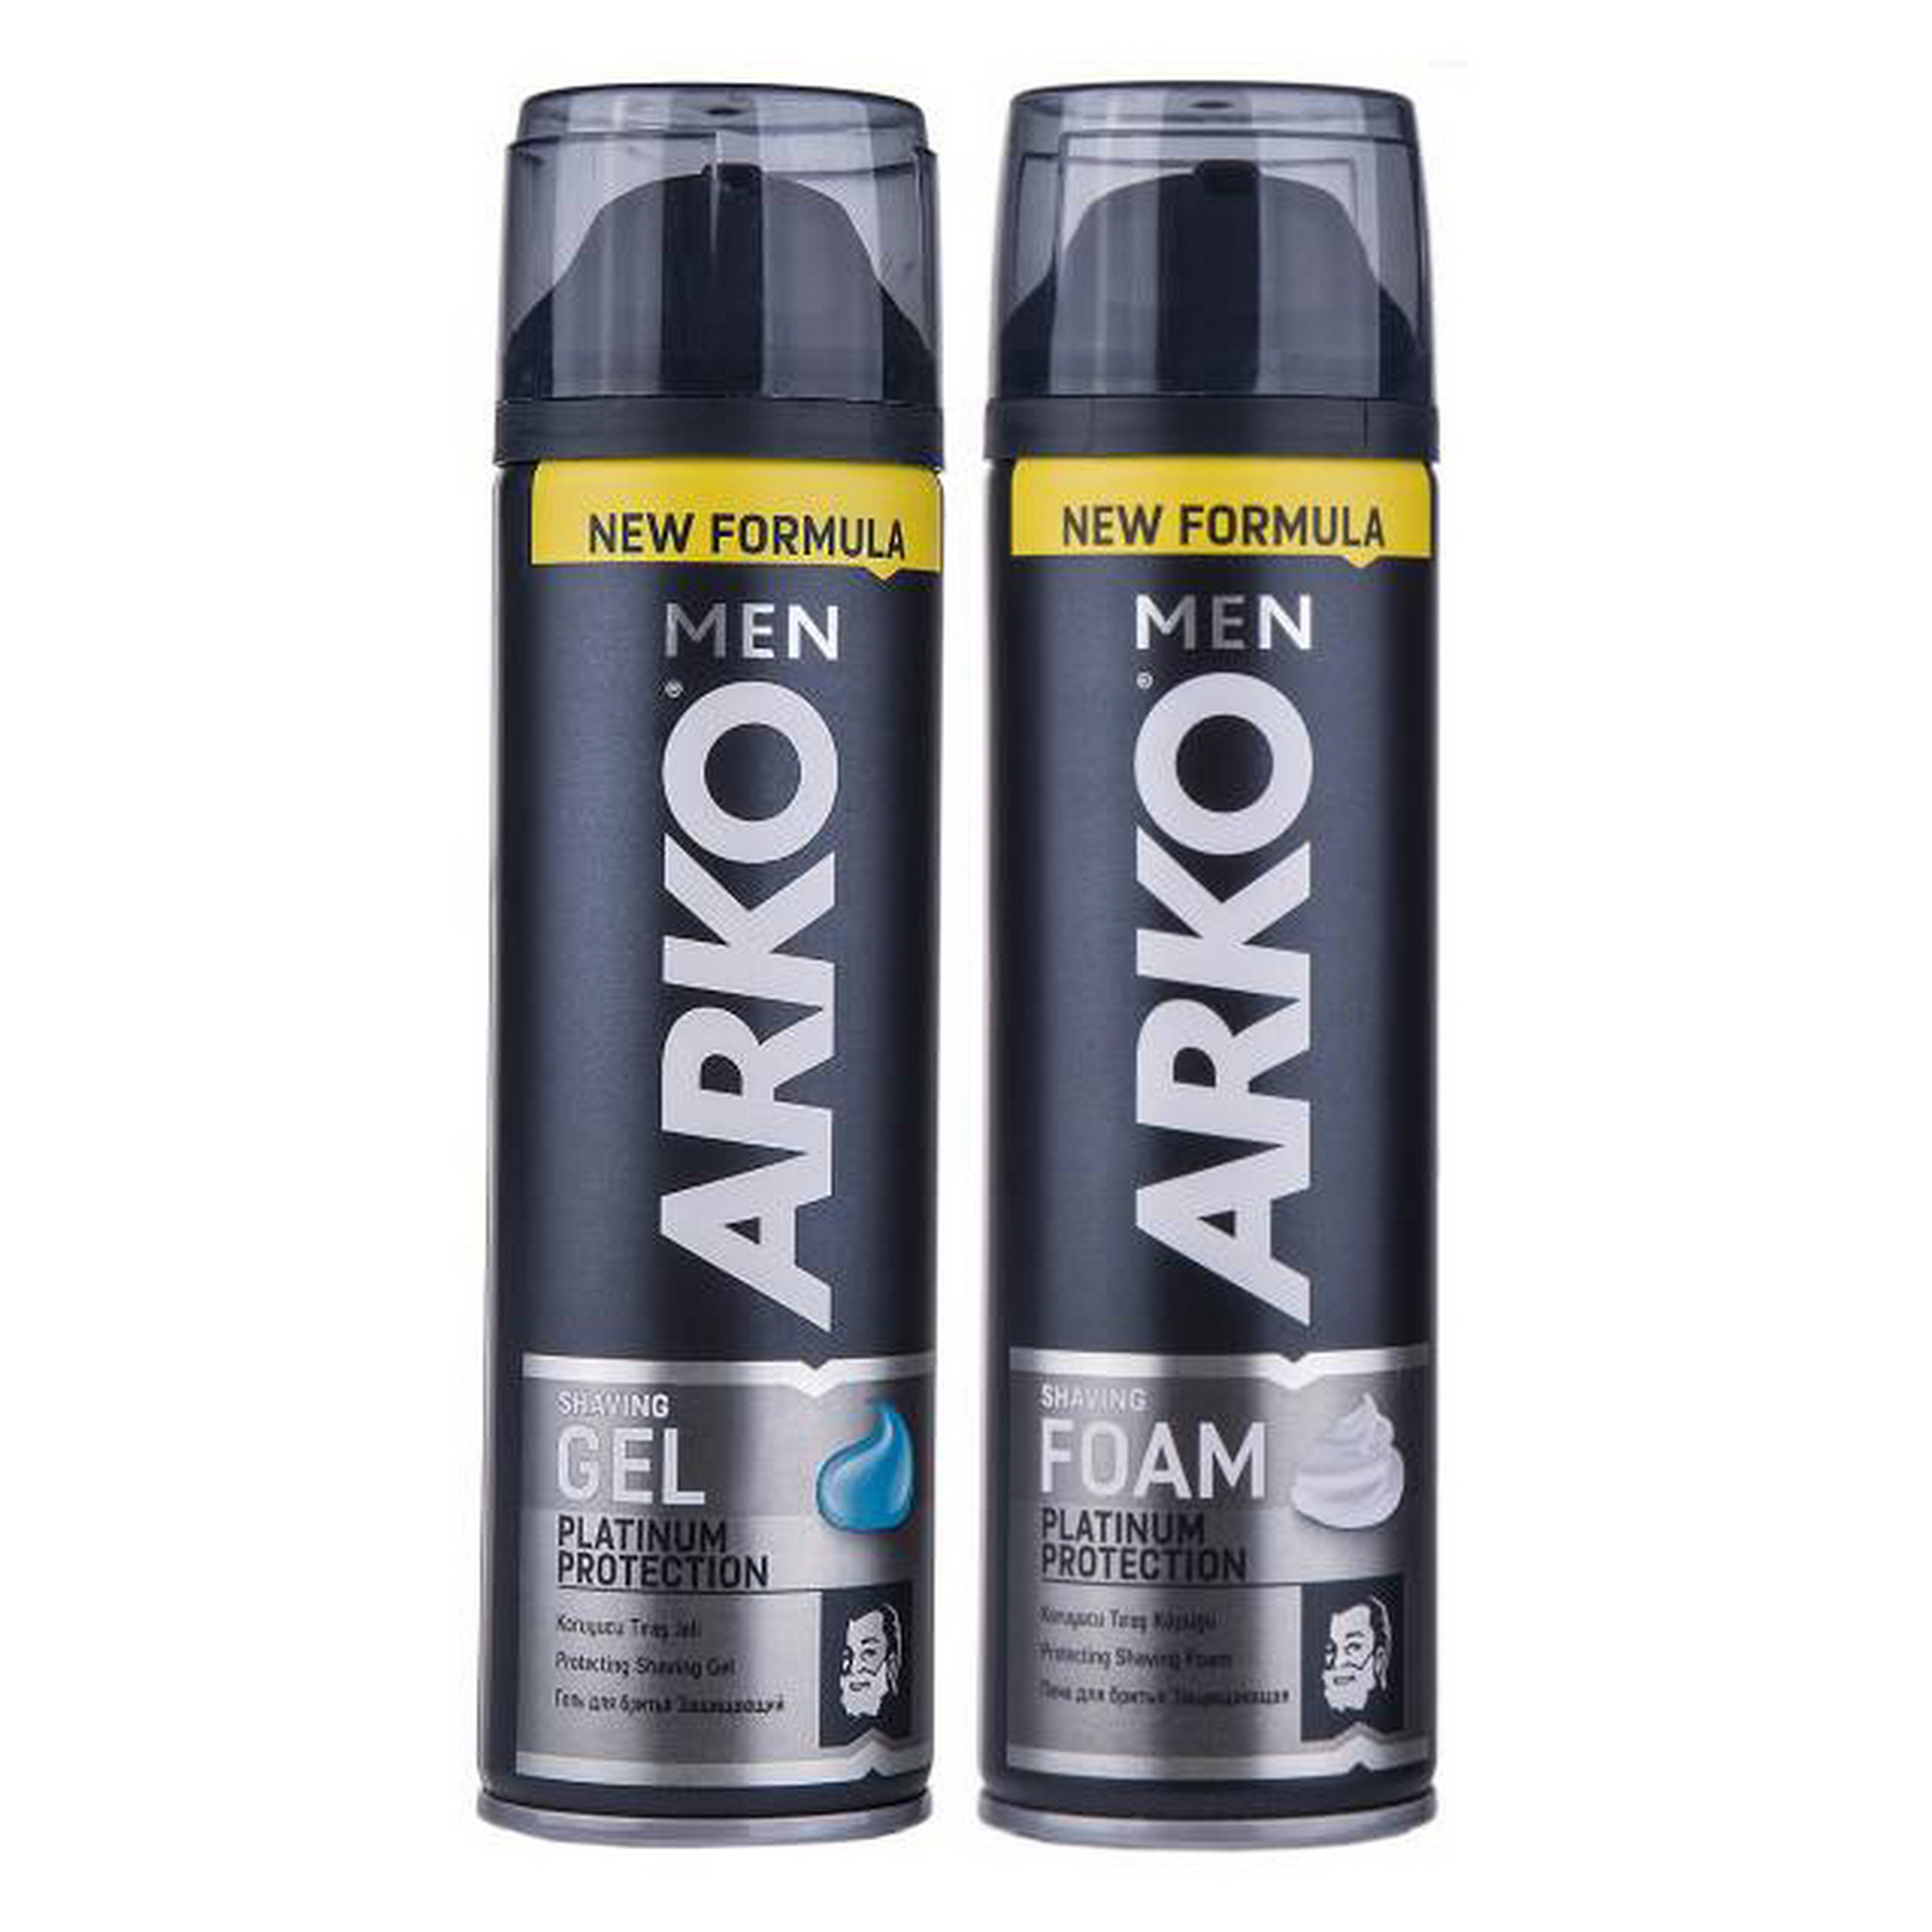 فوم اصلاح آرکو مدل Platinum Protection حجم 200 میلی لیتر به همراه ژل اصلاح آرکو مدل Platinum Protection